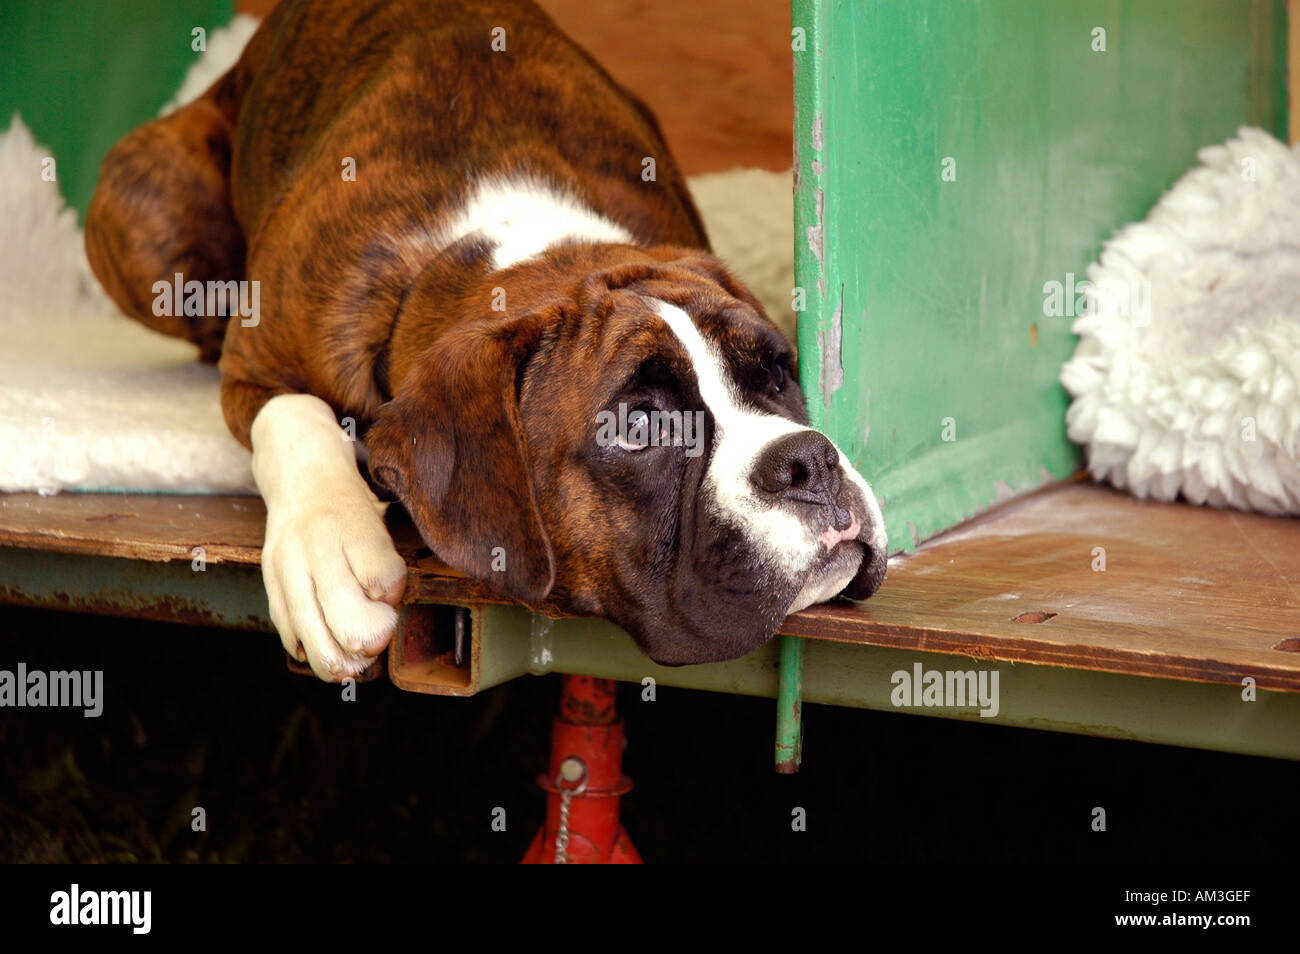 Boxer Dog Scottish Kennel Club Stock Photos & Boxer Dog Scottish ...